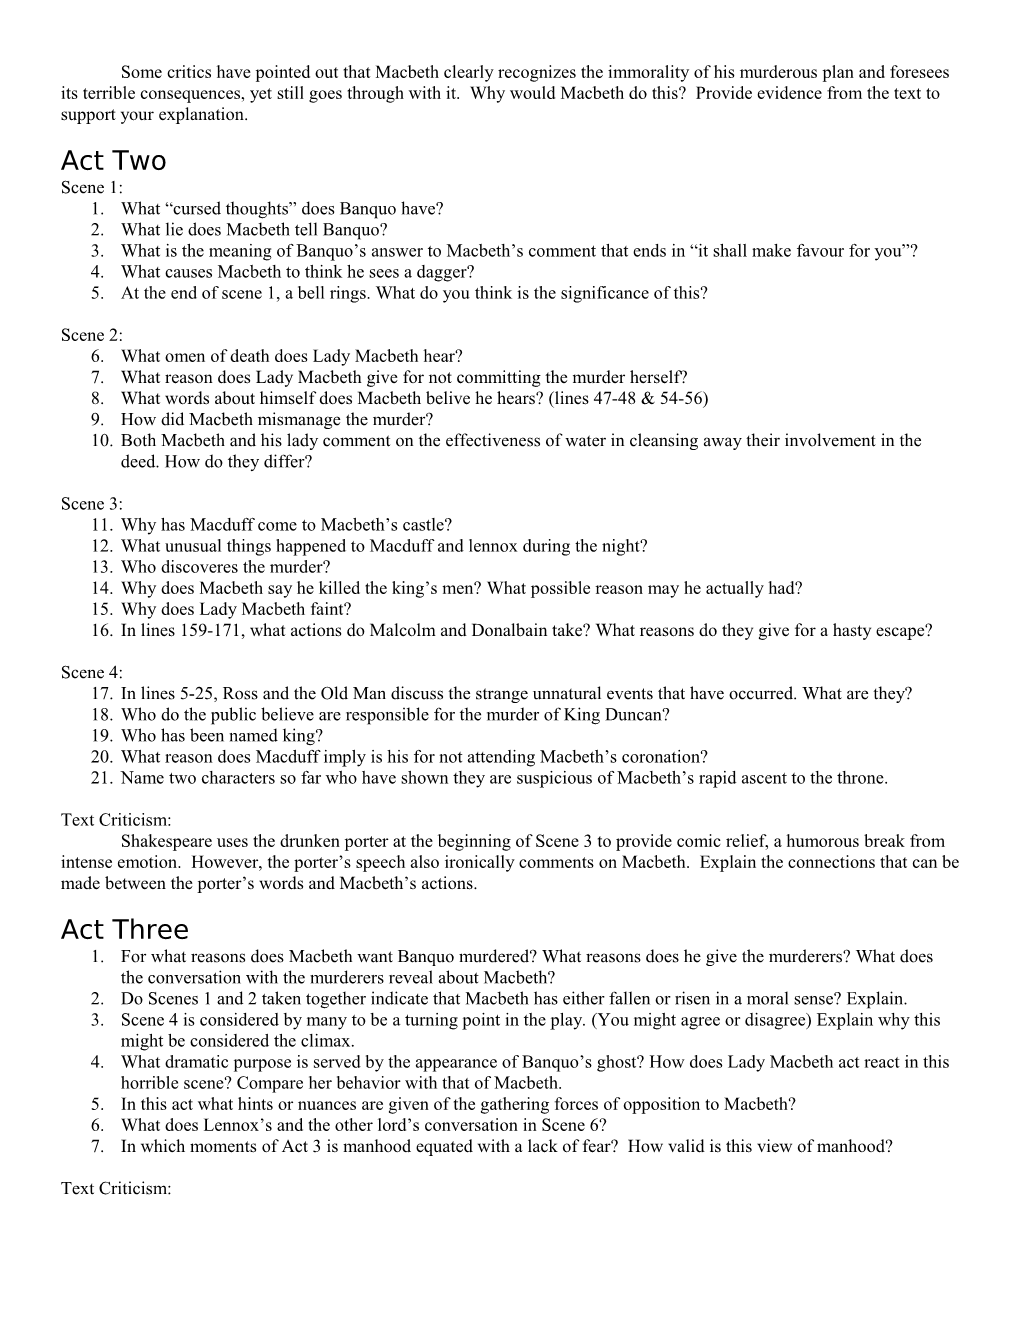 Macbeth Study Guide Questions